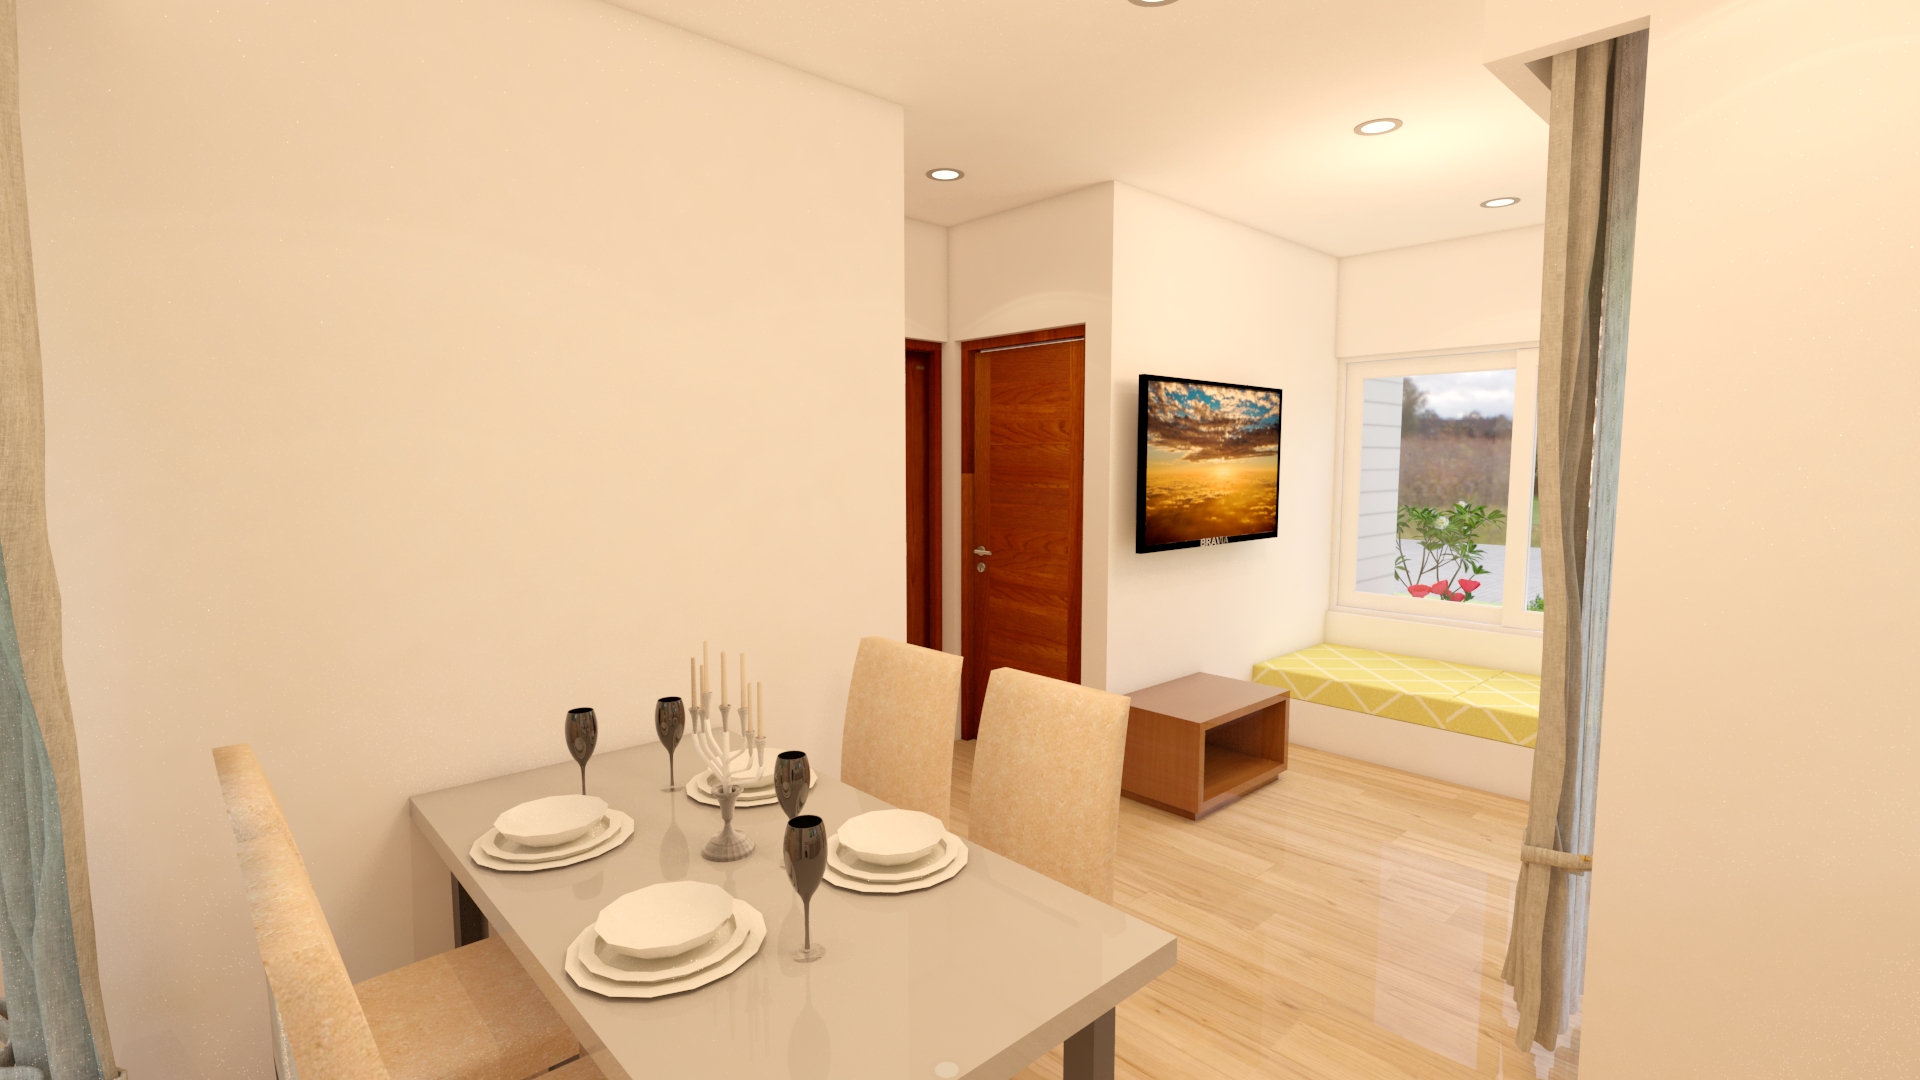 design for 7x7 living room